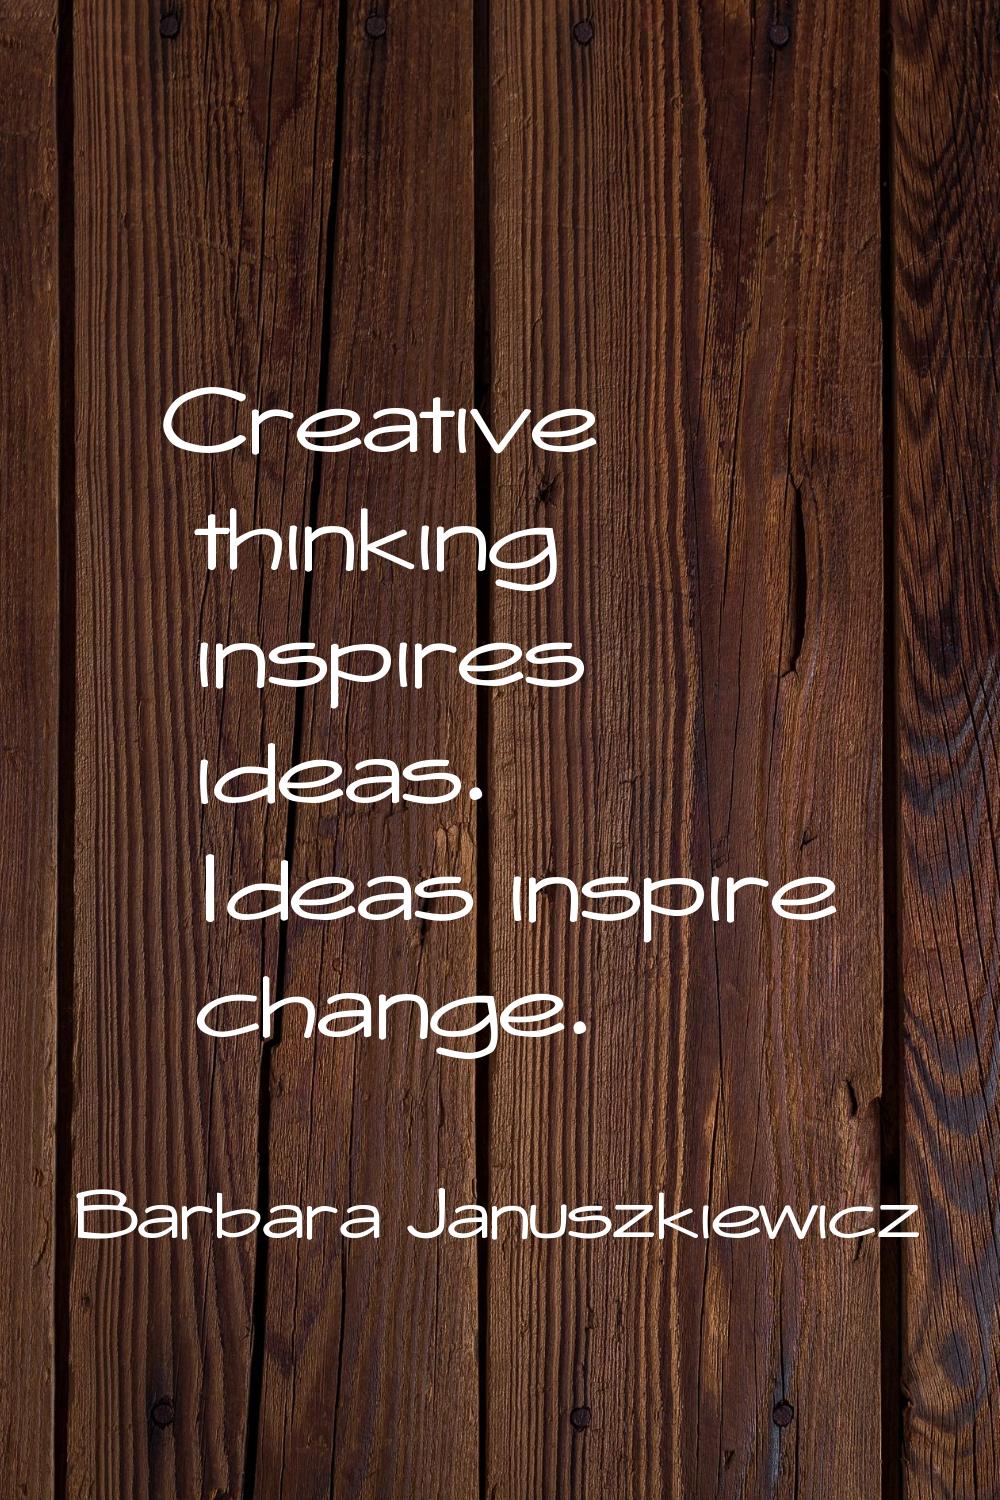 Creative thinking inspires ideas. Ideas inspire change.